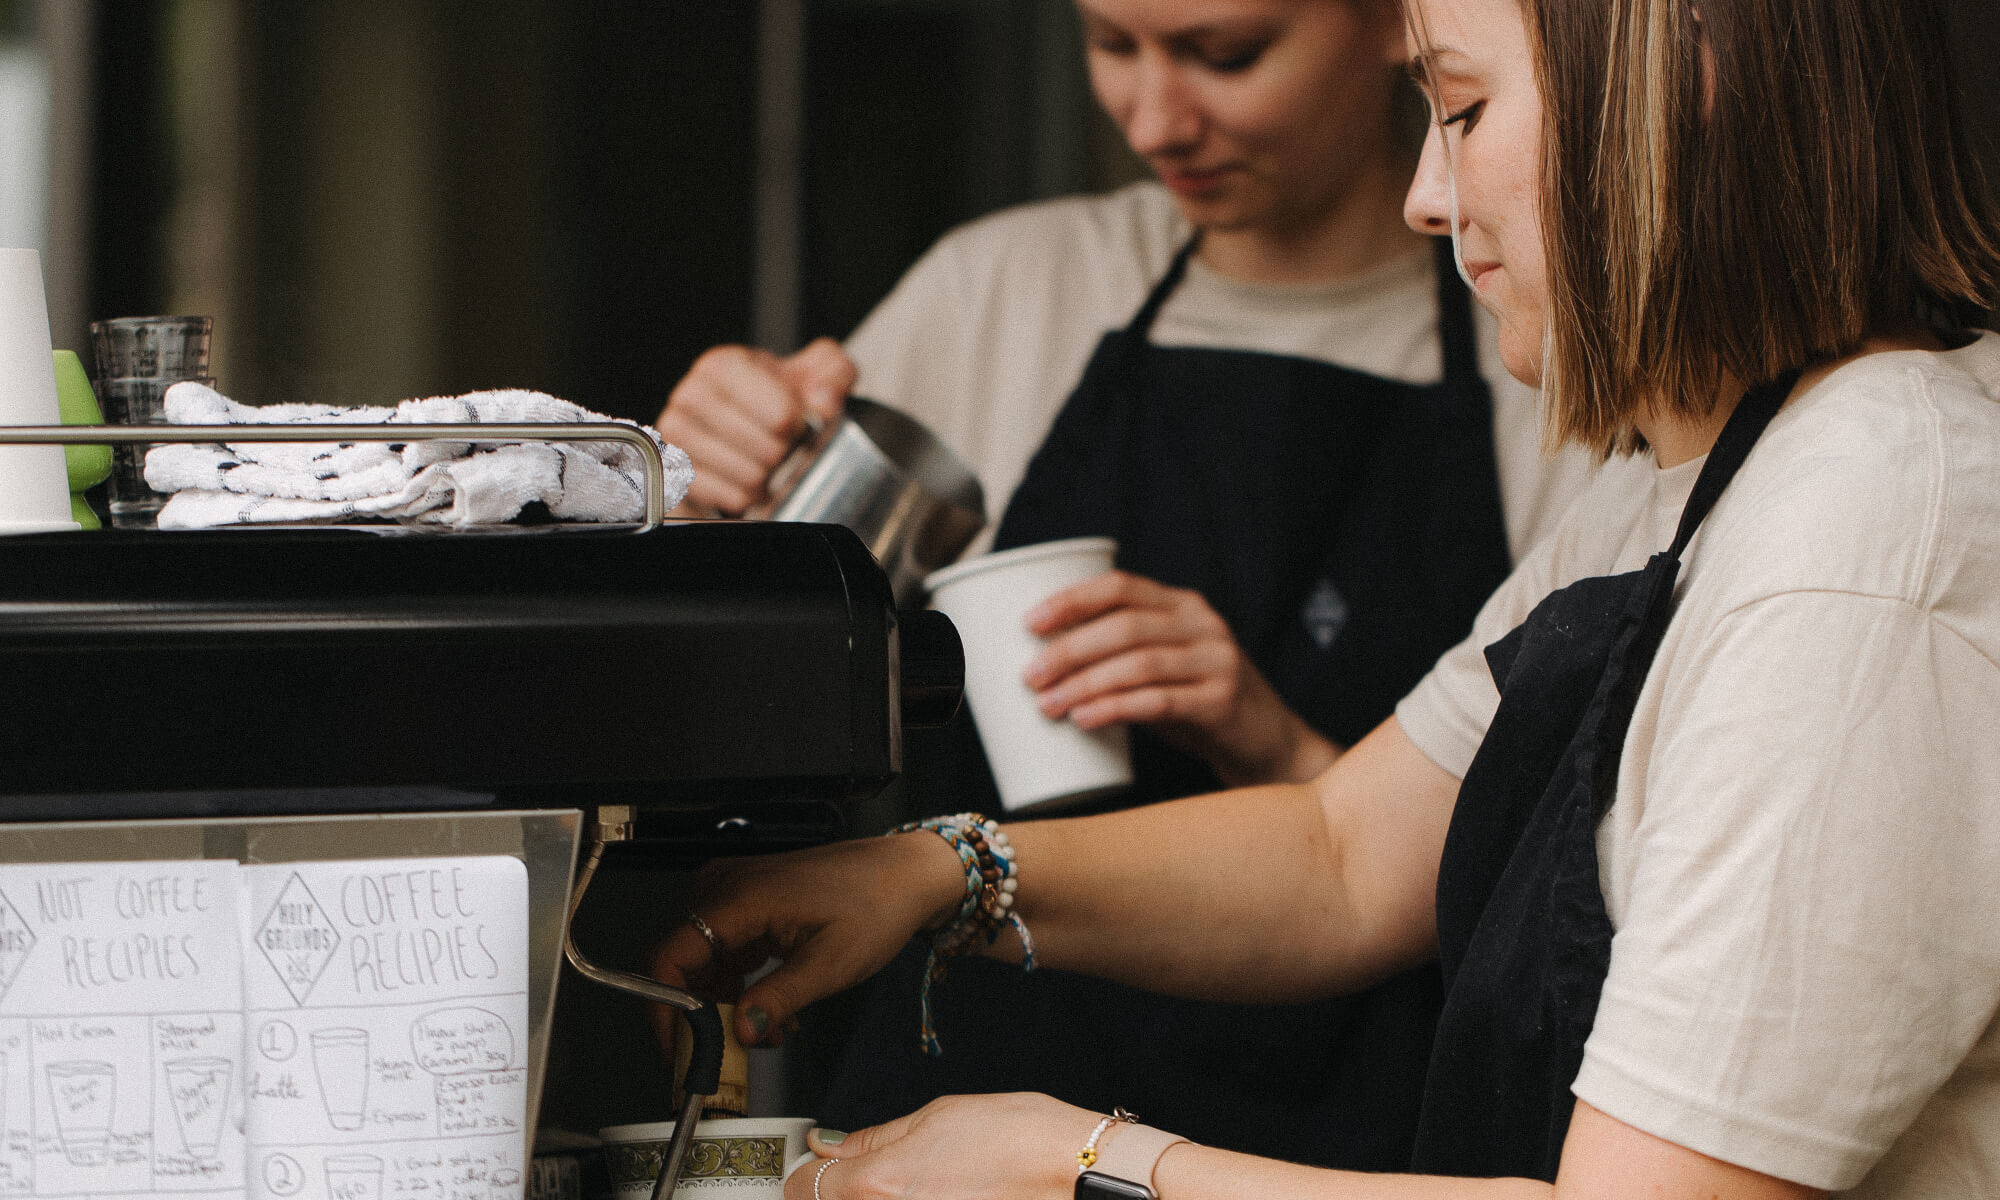 two women make coffee at an espresso machine